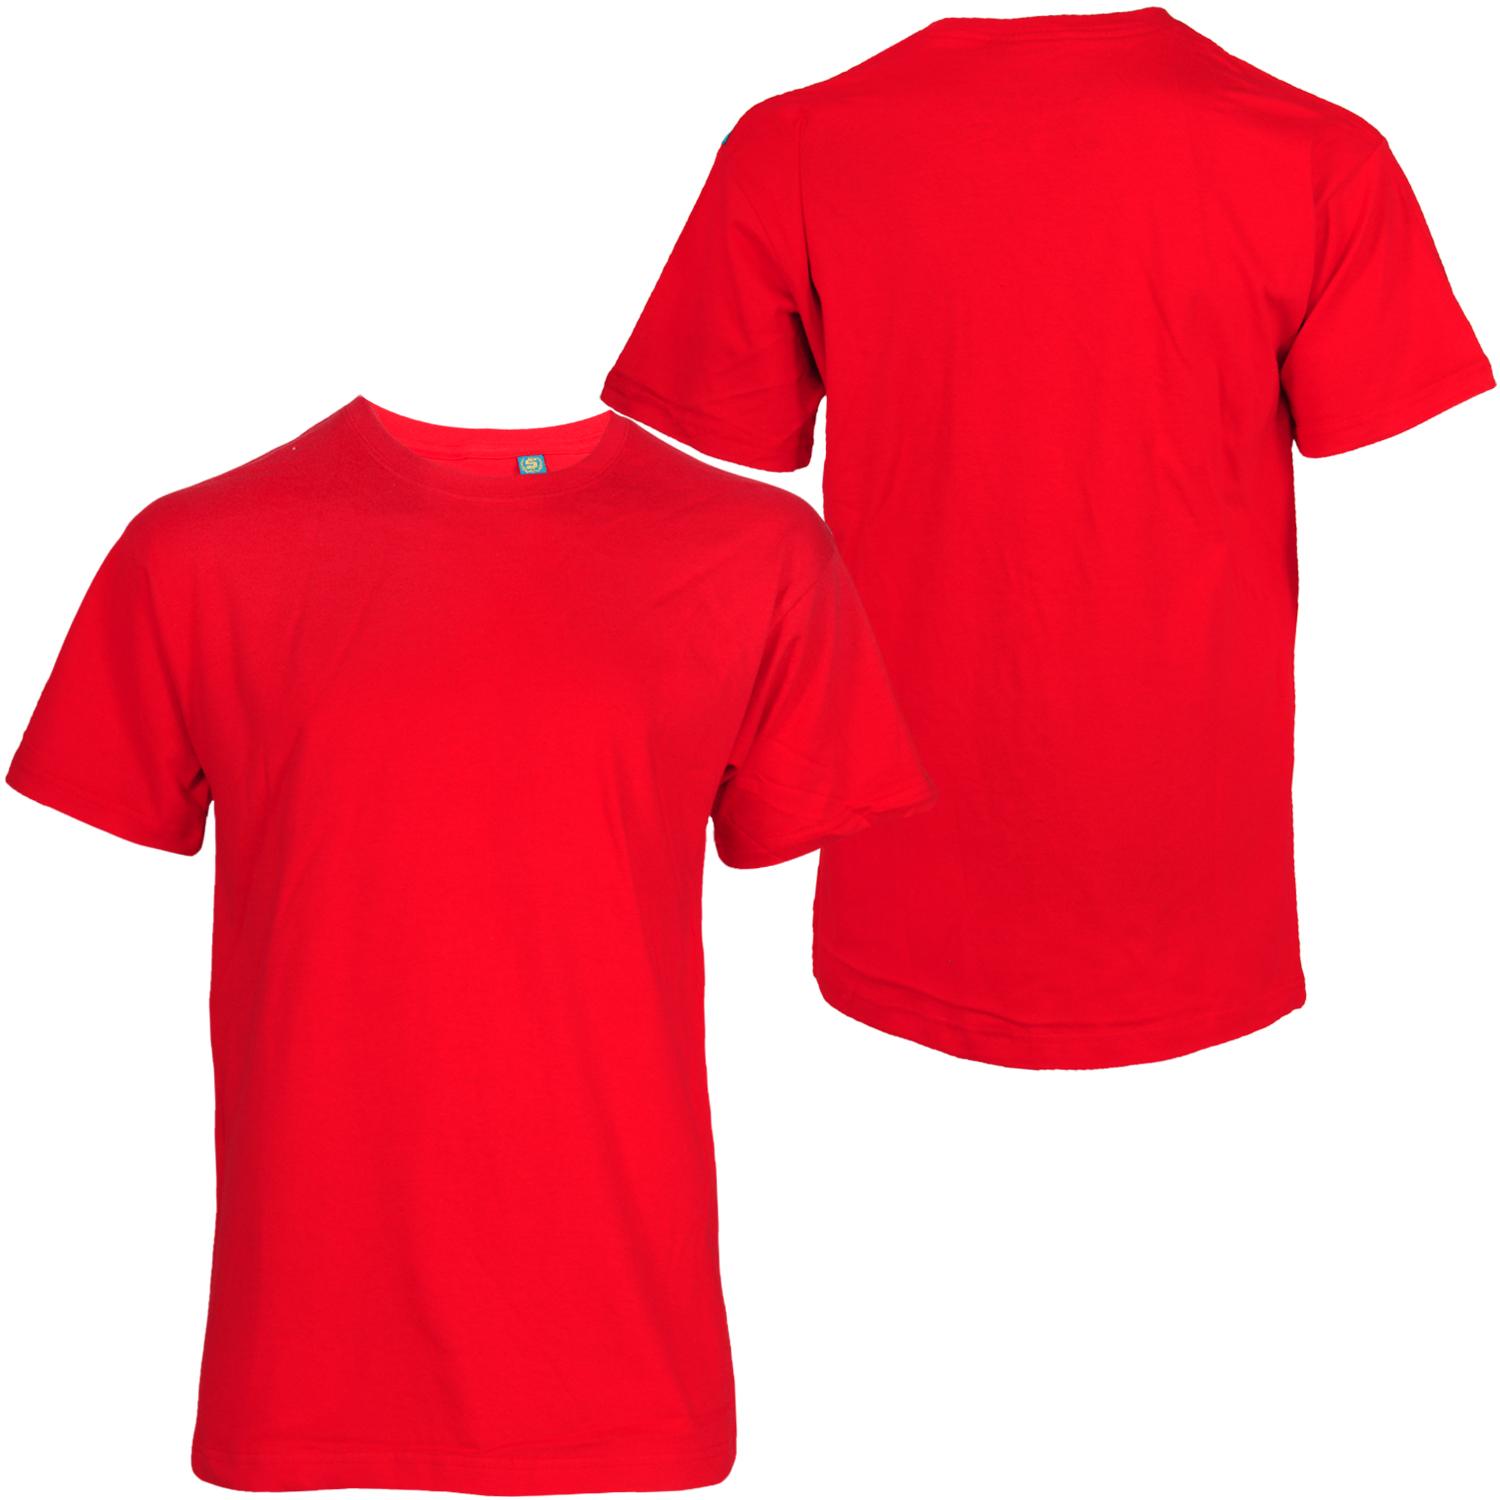 Foto Shmack Shmack Basic Blank T-shirt Rot Camisetas Rojo foto 232651